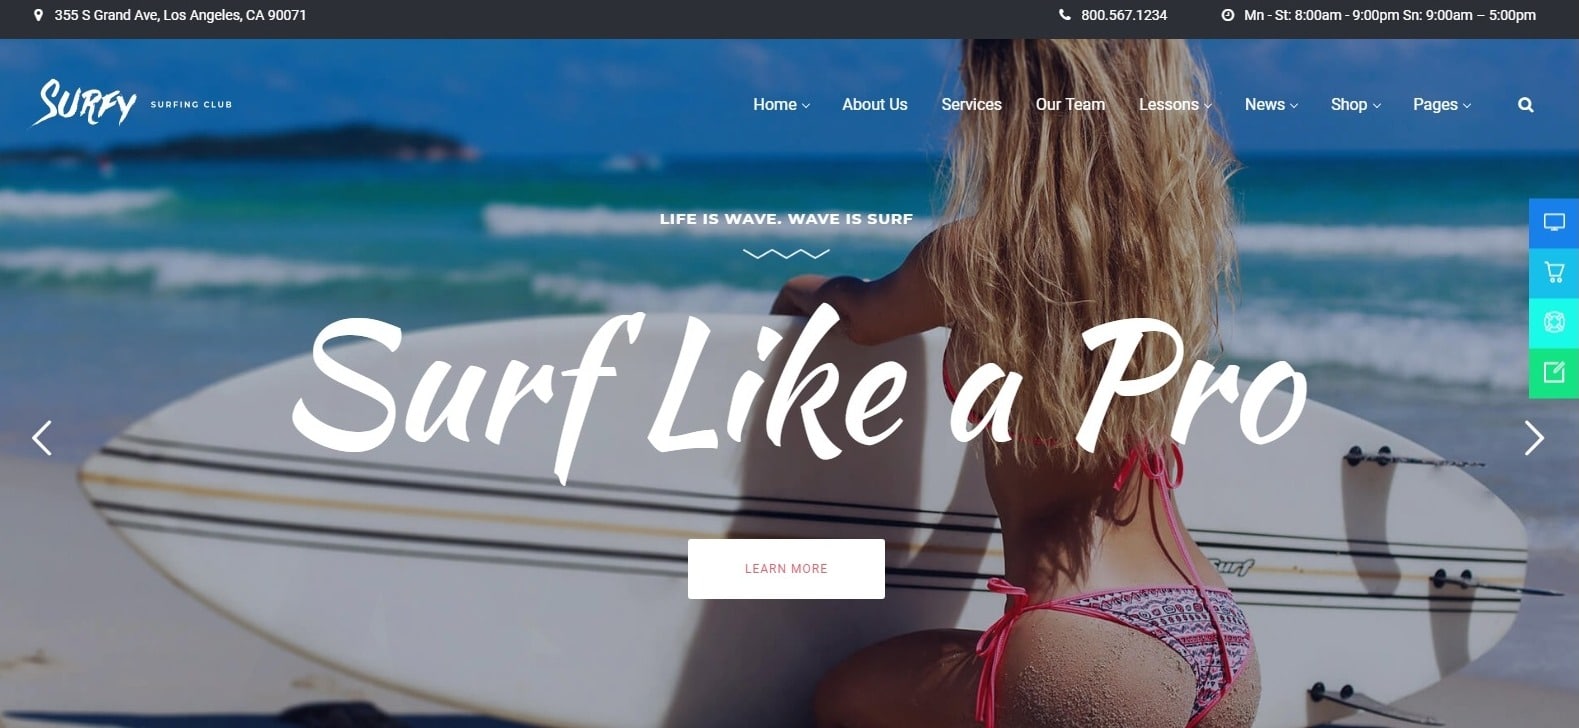 surfy-sports-website-template